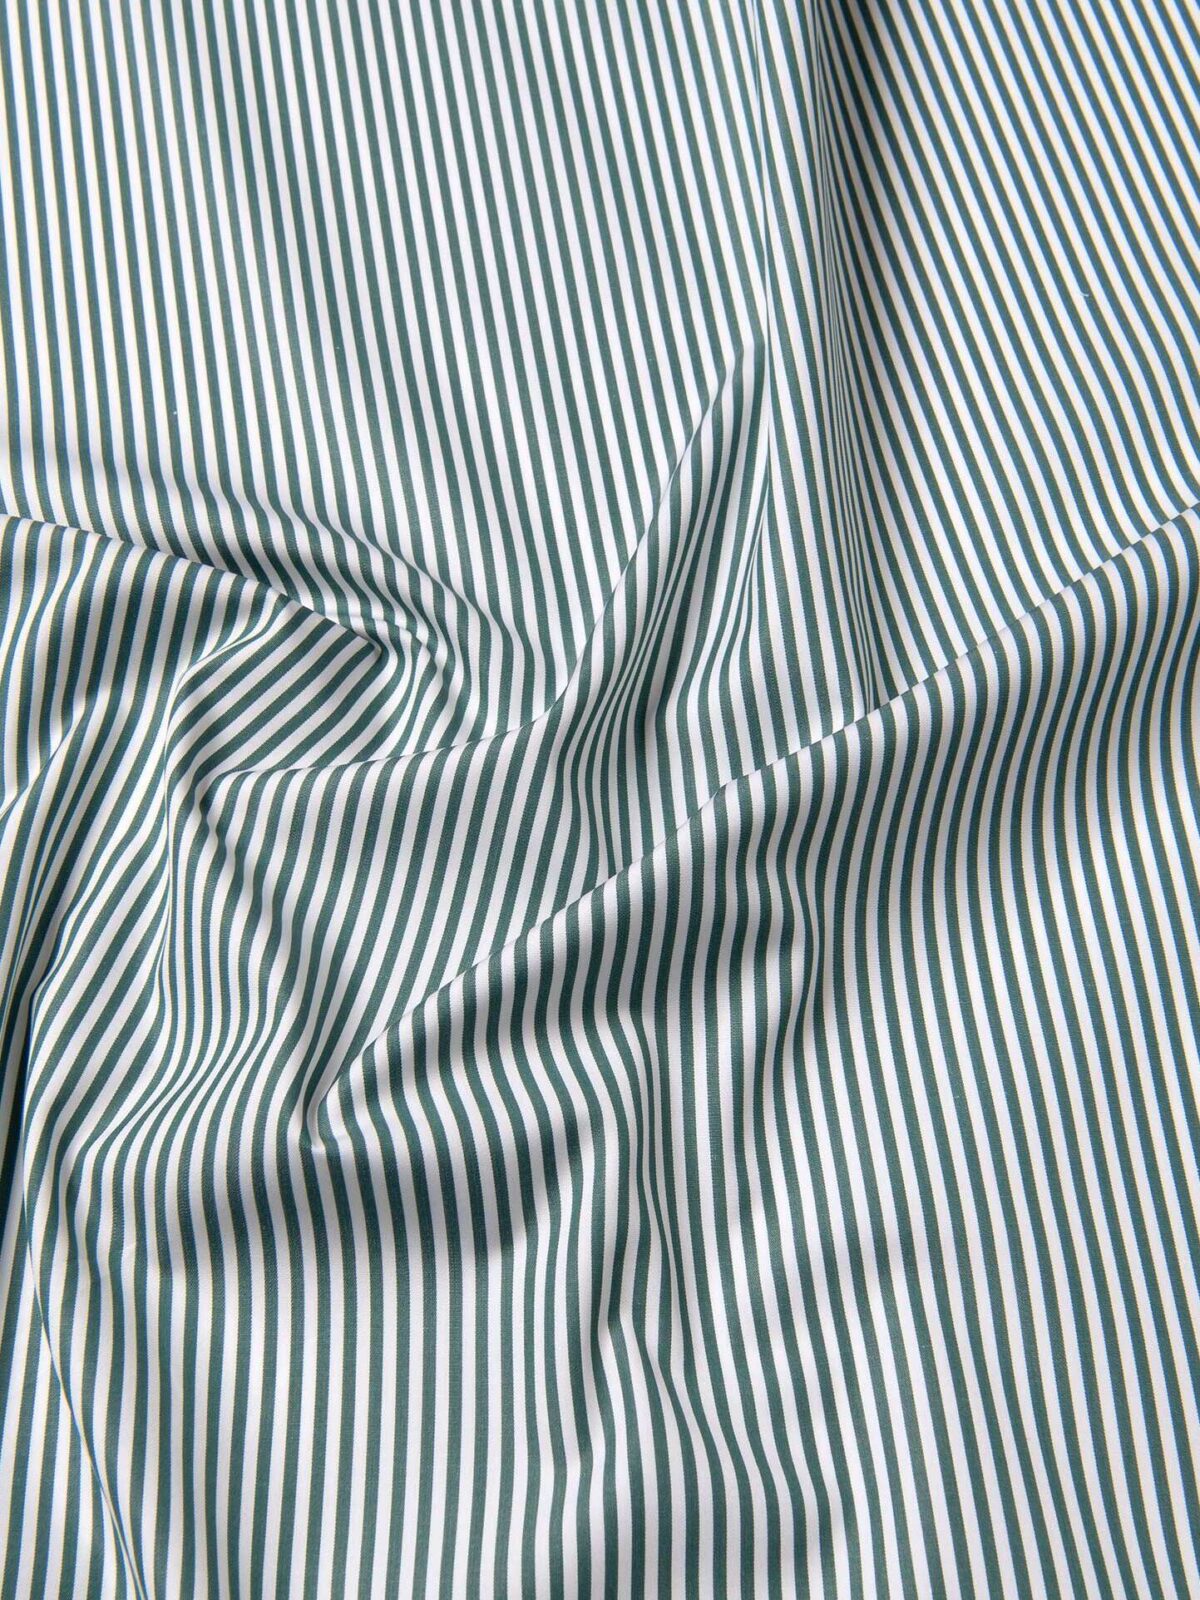 Stanton 120s Green Bengal Stripe Shirts by Proper Cloth